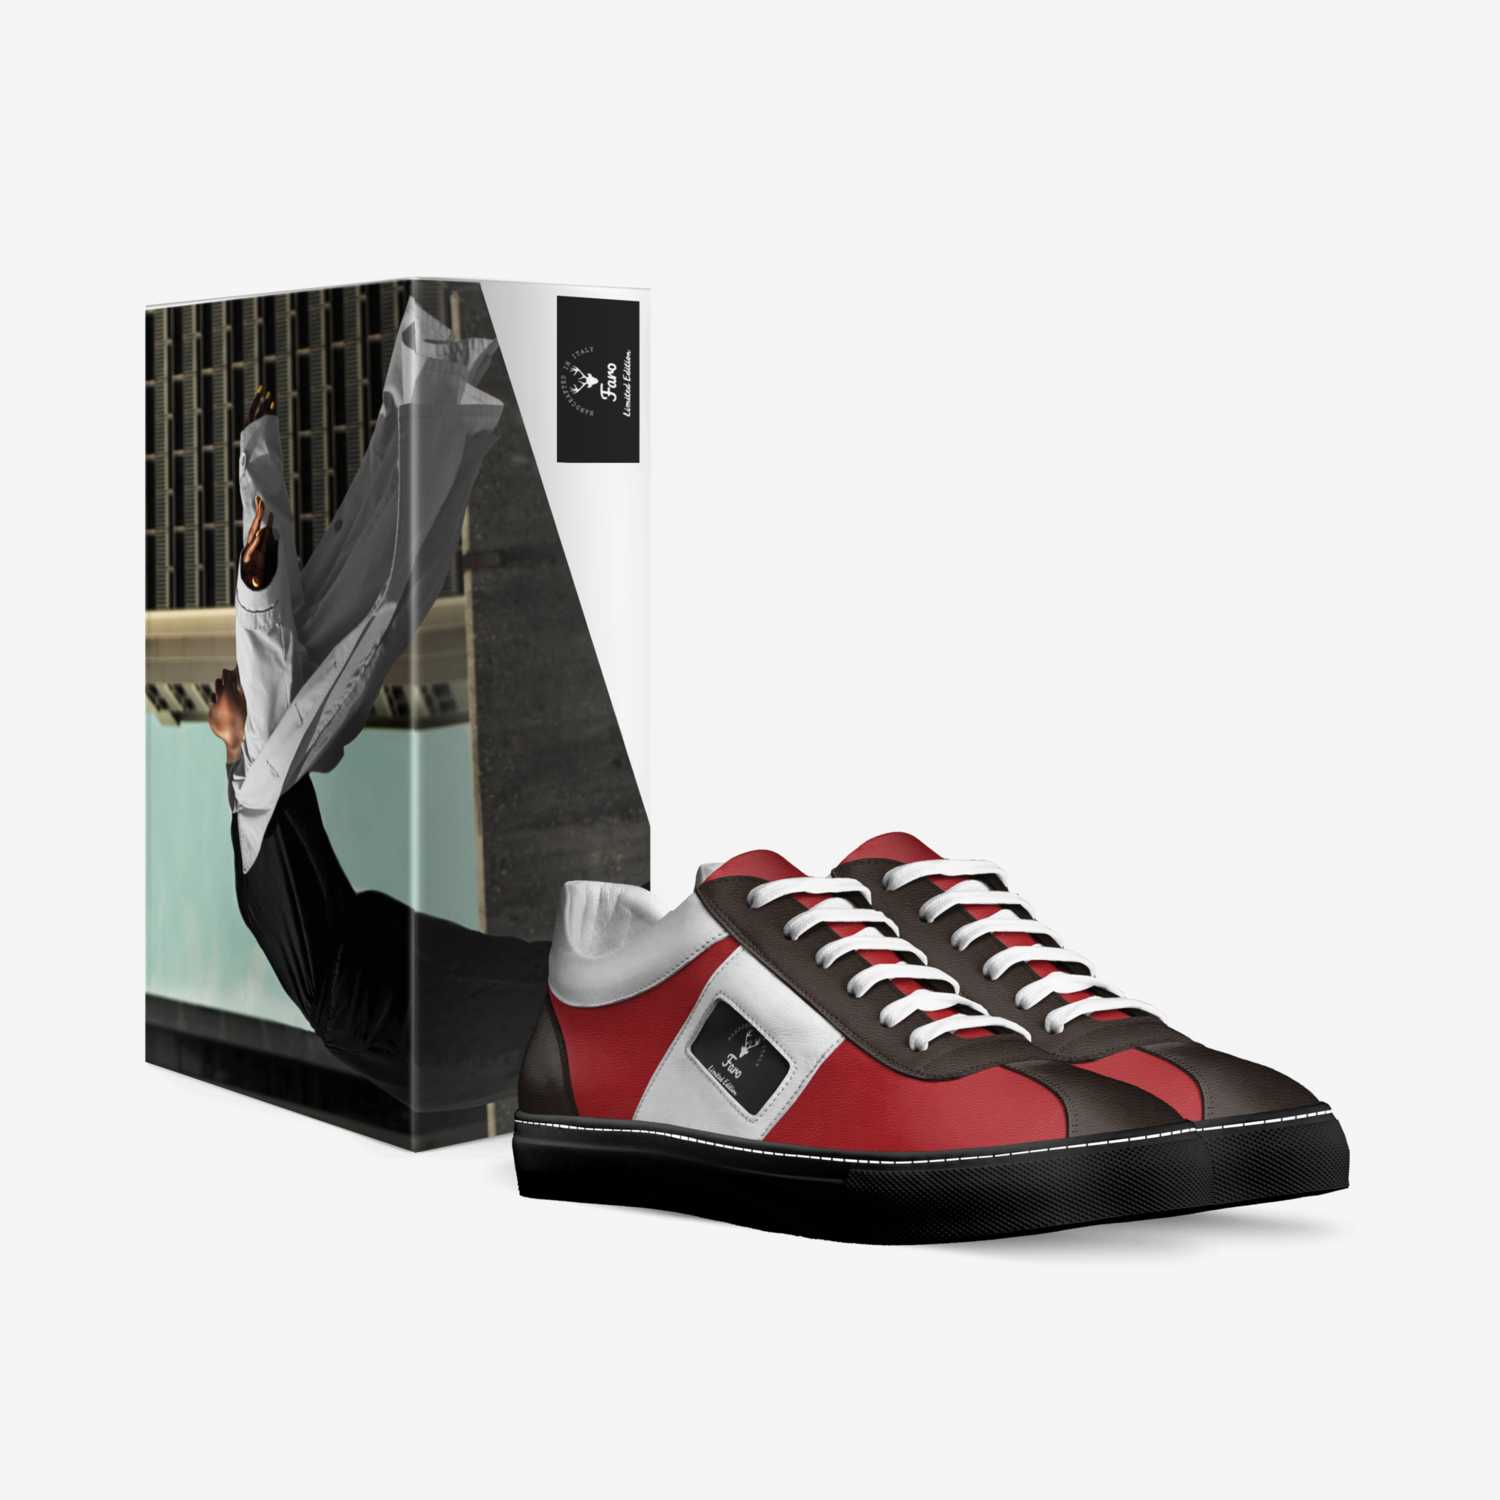 Faro custom made in Italy shoes by Faro Lo Cricchio | Box view